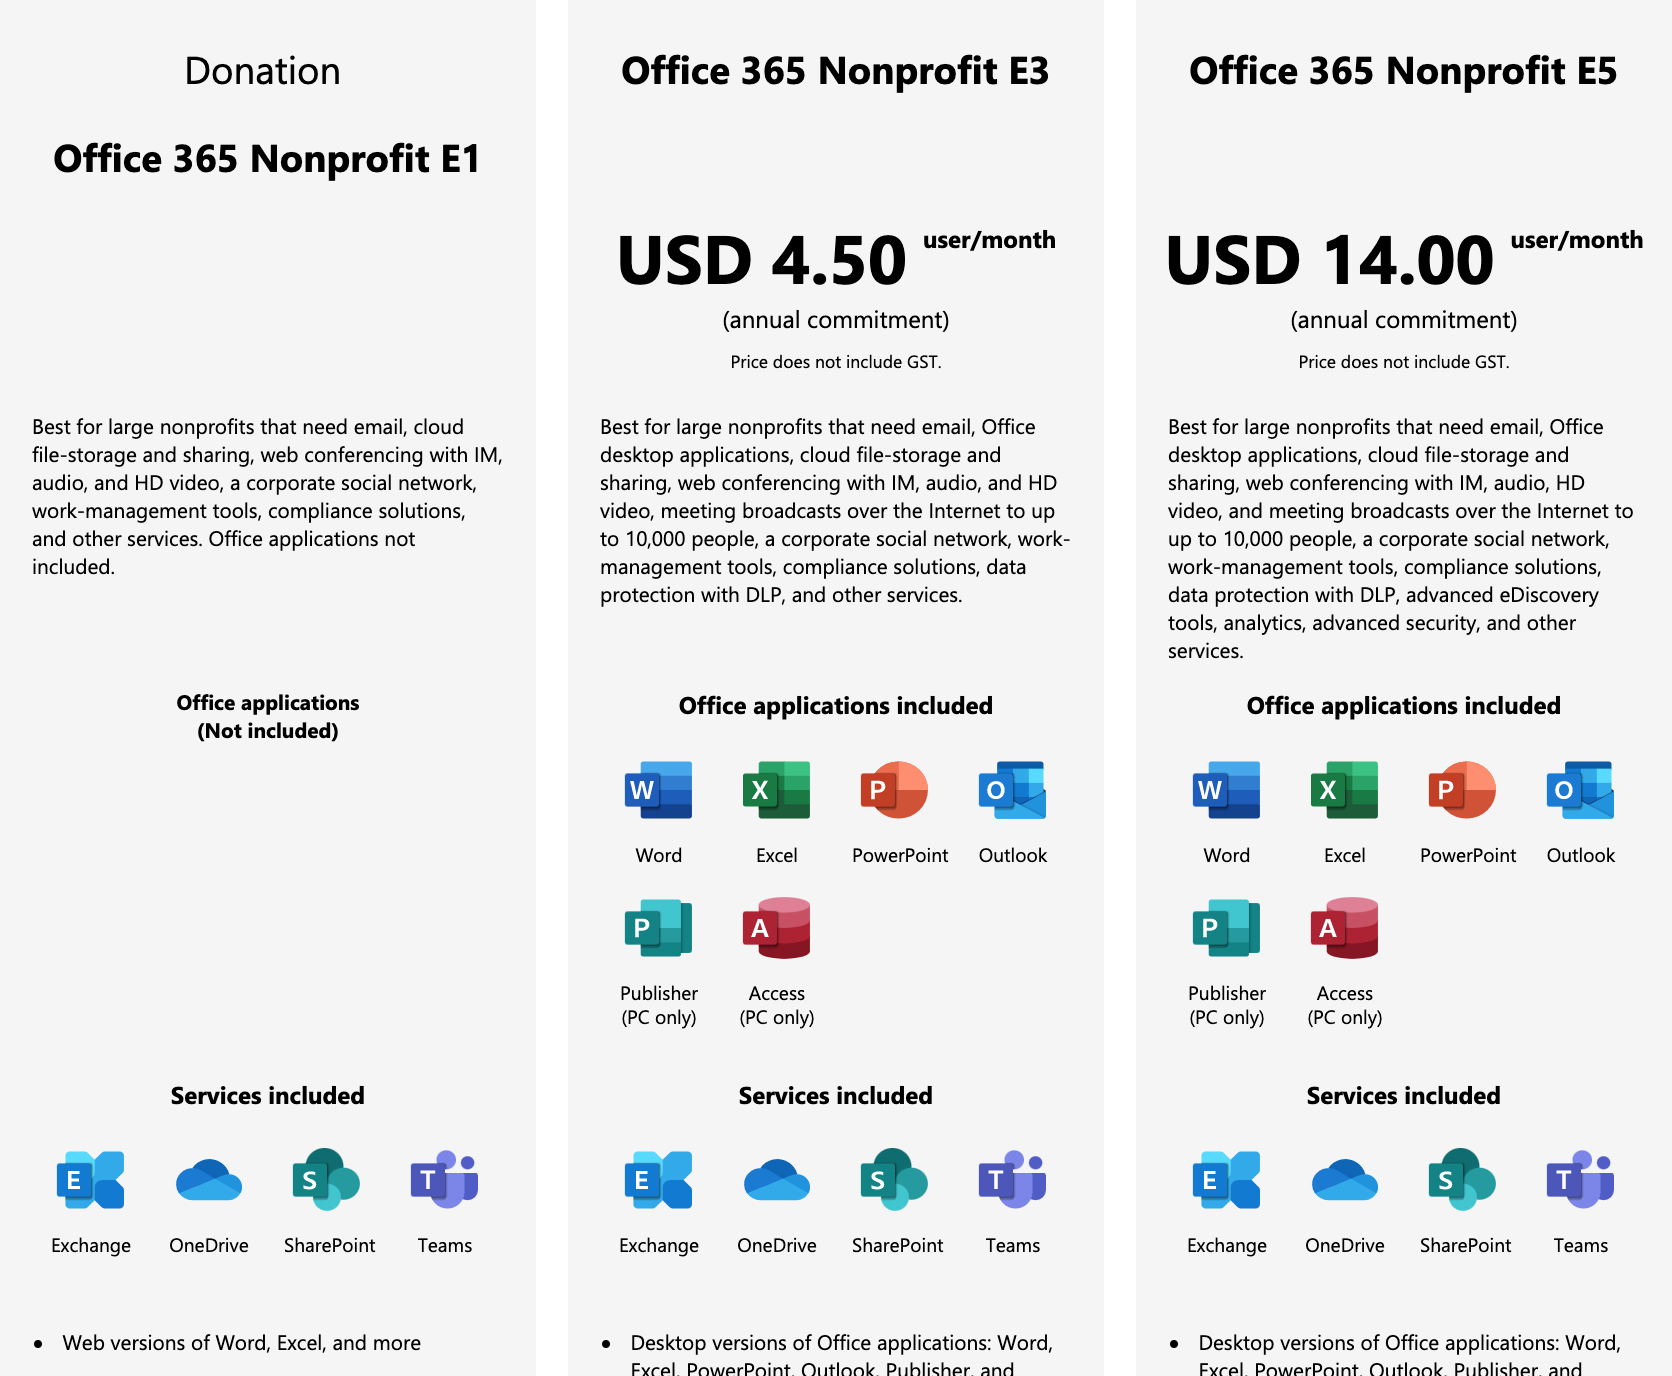 microsoft office 365 business premium for nonprofits